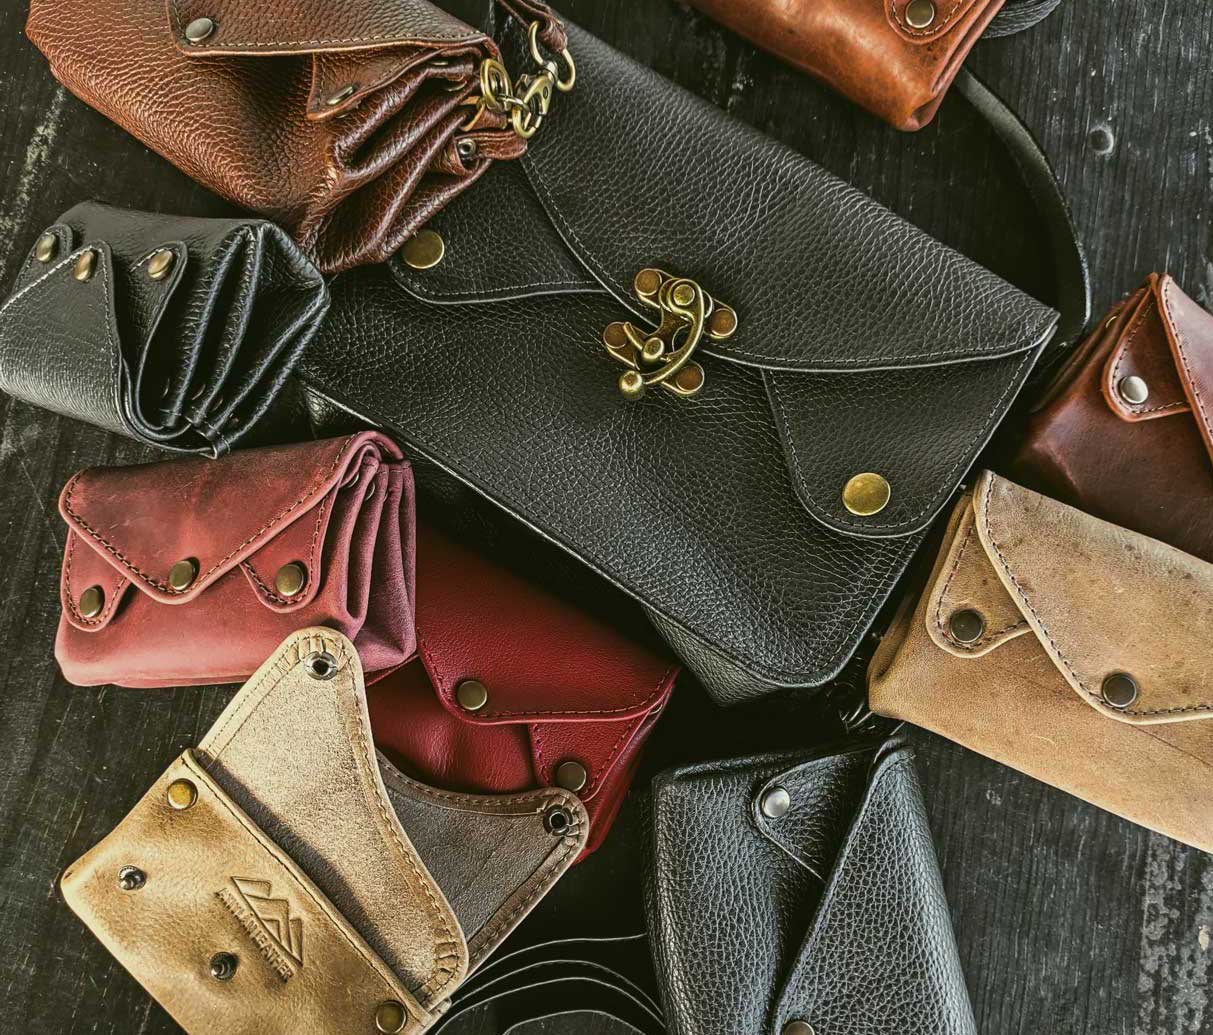 Wholesale Genuine Leather Men Envelope Clutch Bag Man Purse Handbag for Men  Large Capacity Wallet with Wristlet Hand Bag Clutch Wallet From  m.